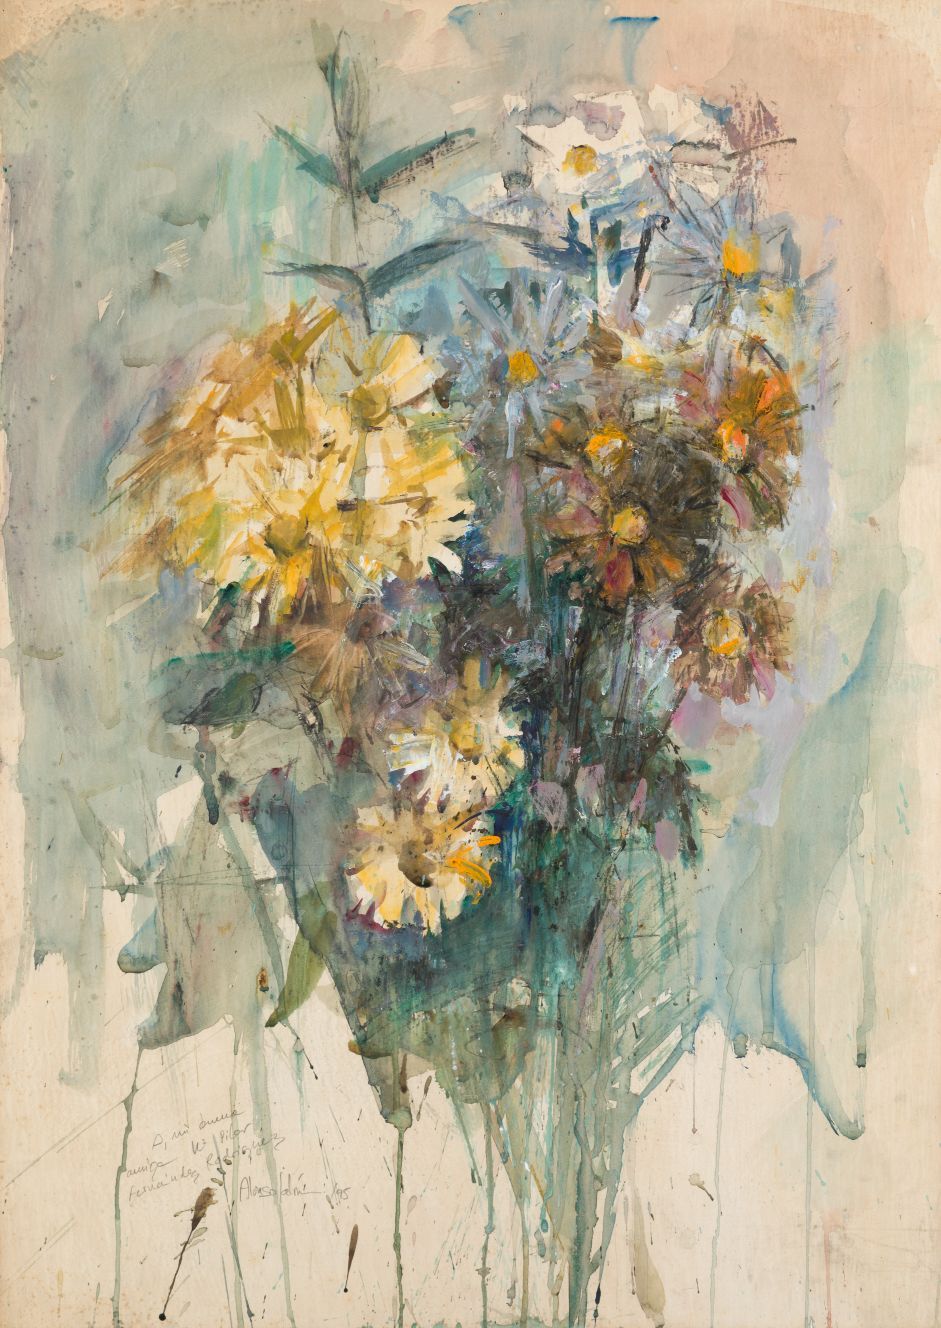 JOSÉ MARÍA ALONSO JALÓN (1951 / .) "Flowers" 左下角有铅笔签名的献词和签名 纸上混合媒体。68 x 48 cm